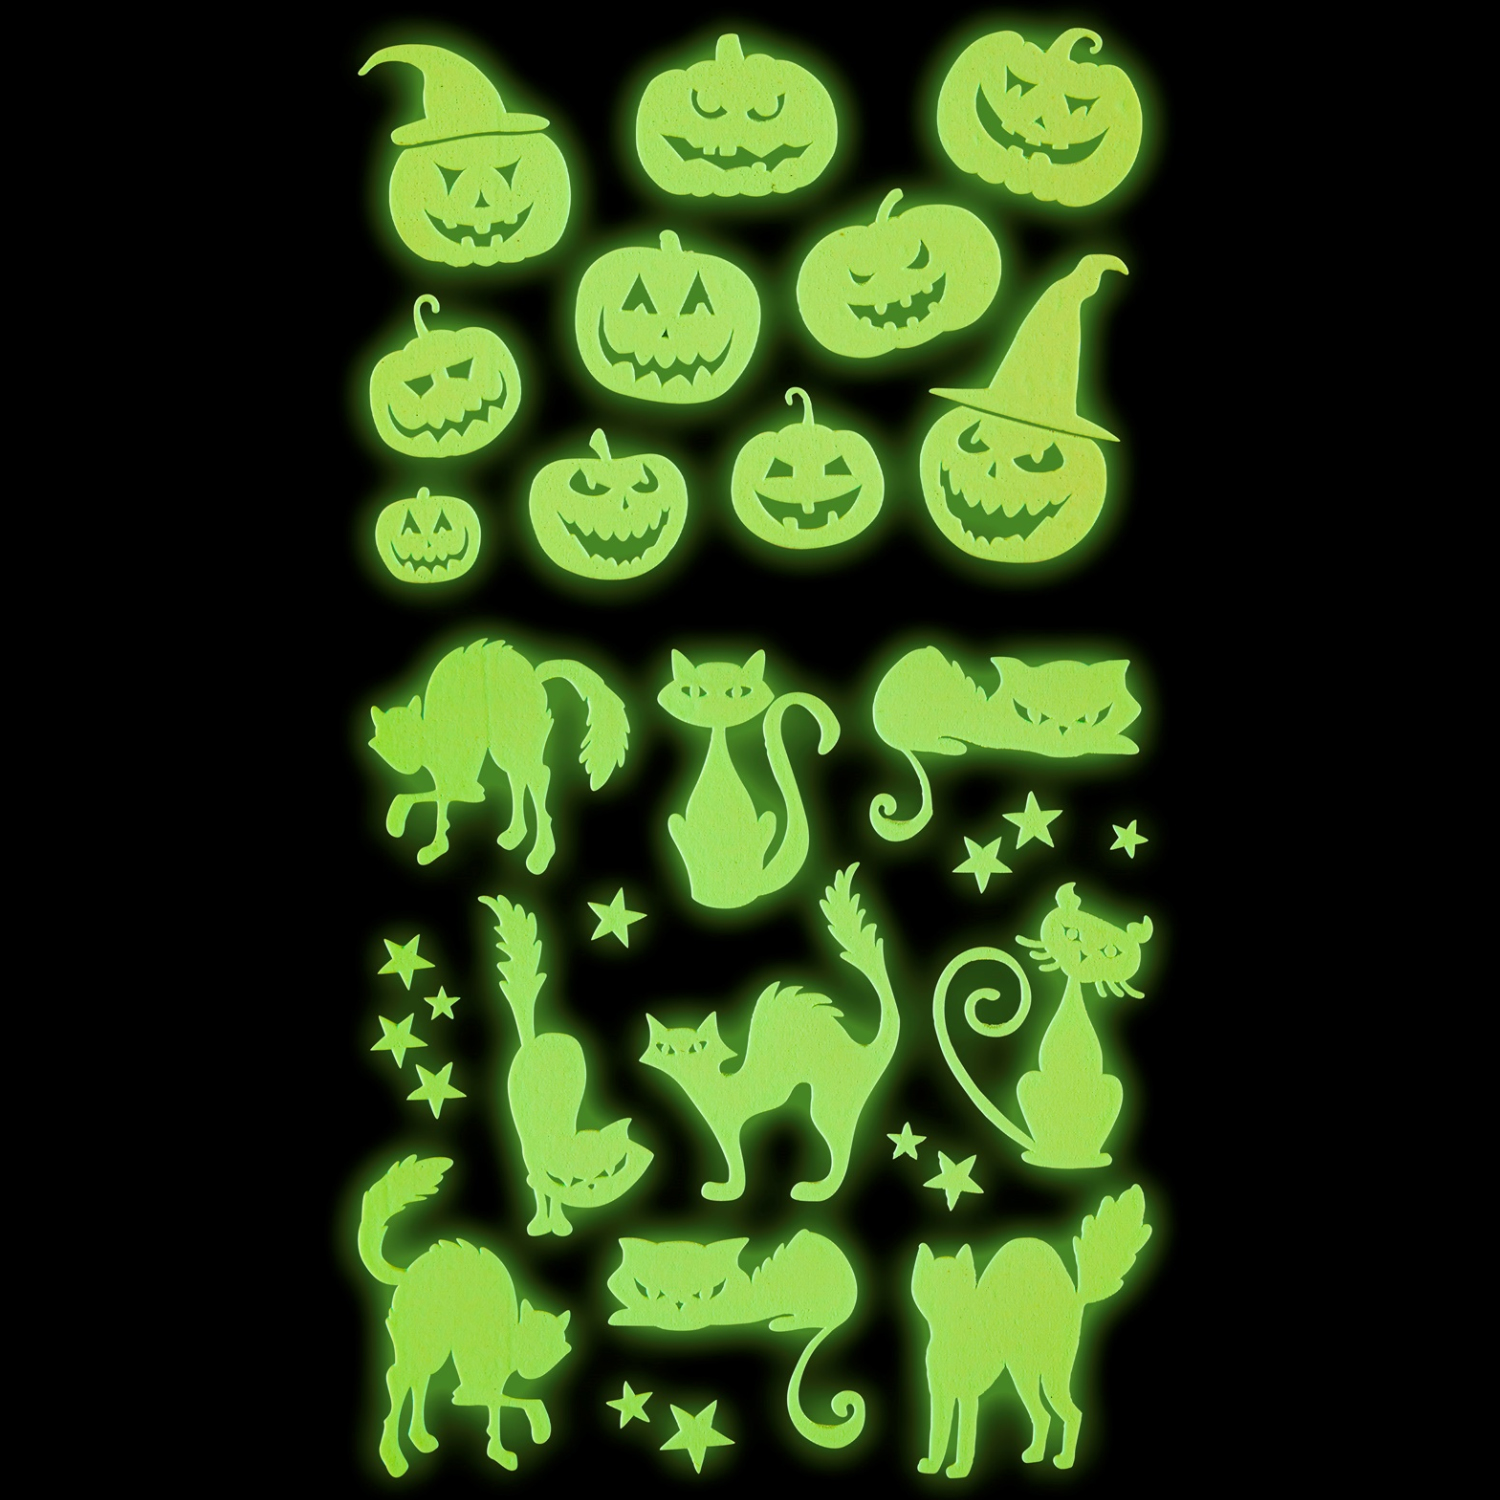 NEU Sticker/Aufkleber nachtleuchtend, Halloween-Motive Katzen & Kürbis, 21x15cm